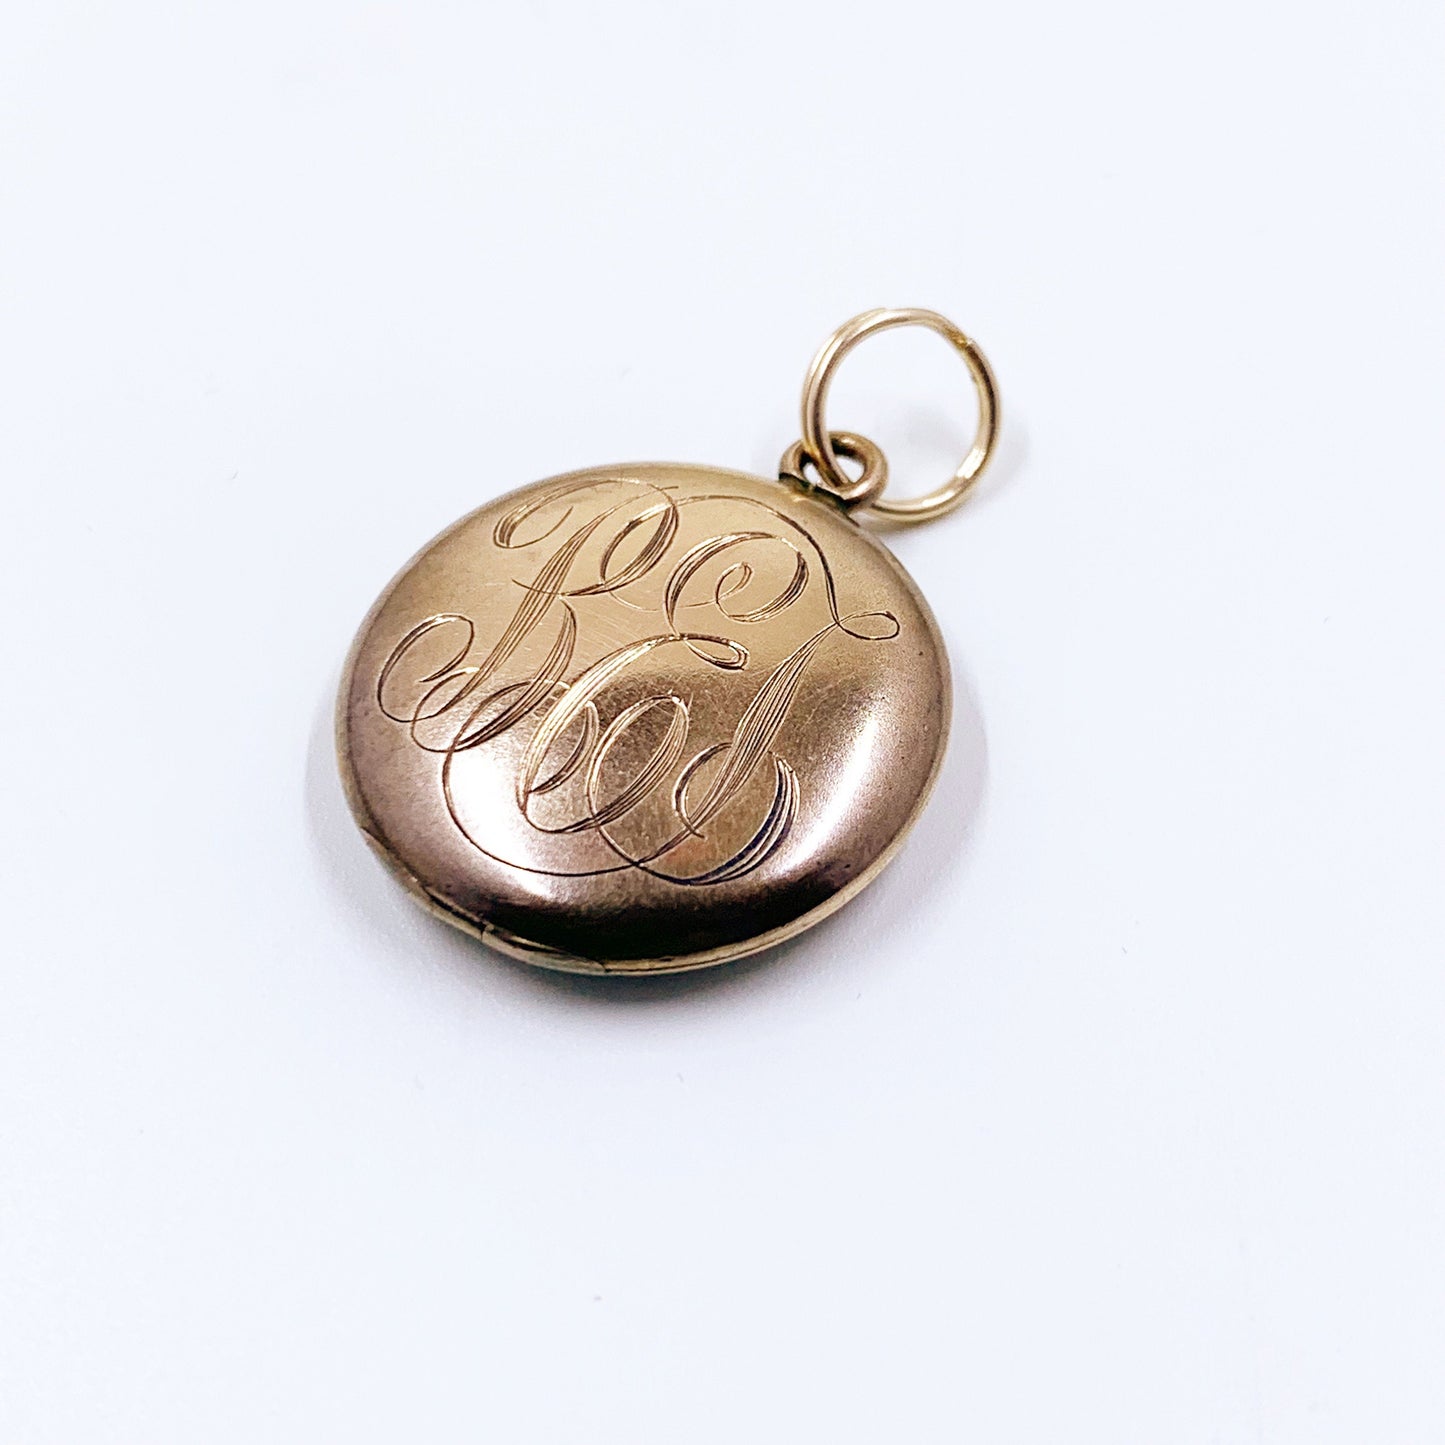 Antique Gold Filled Monogrammed Round Locket | BEJ Monogram | W & H Co. Locket